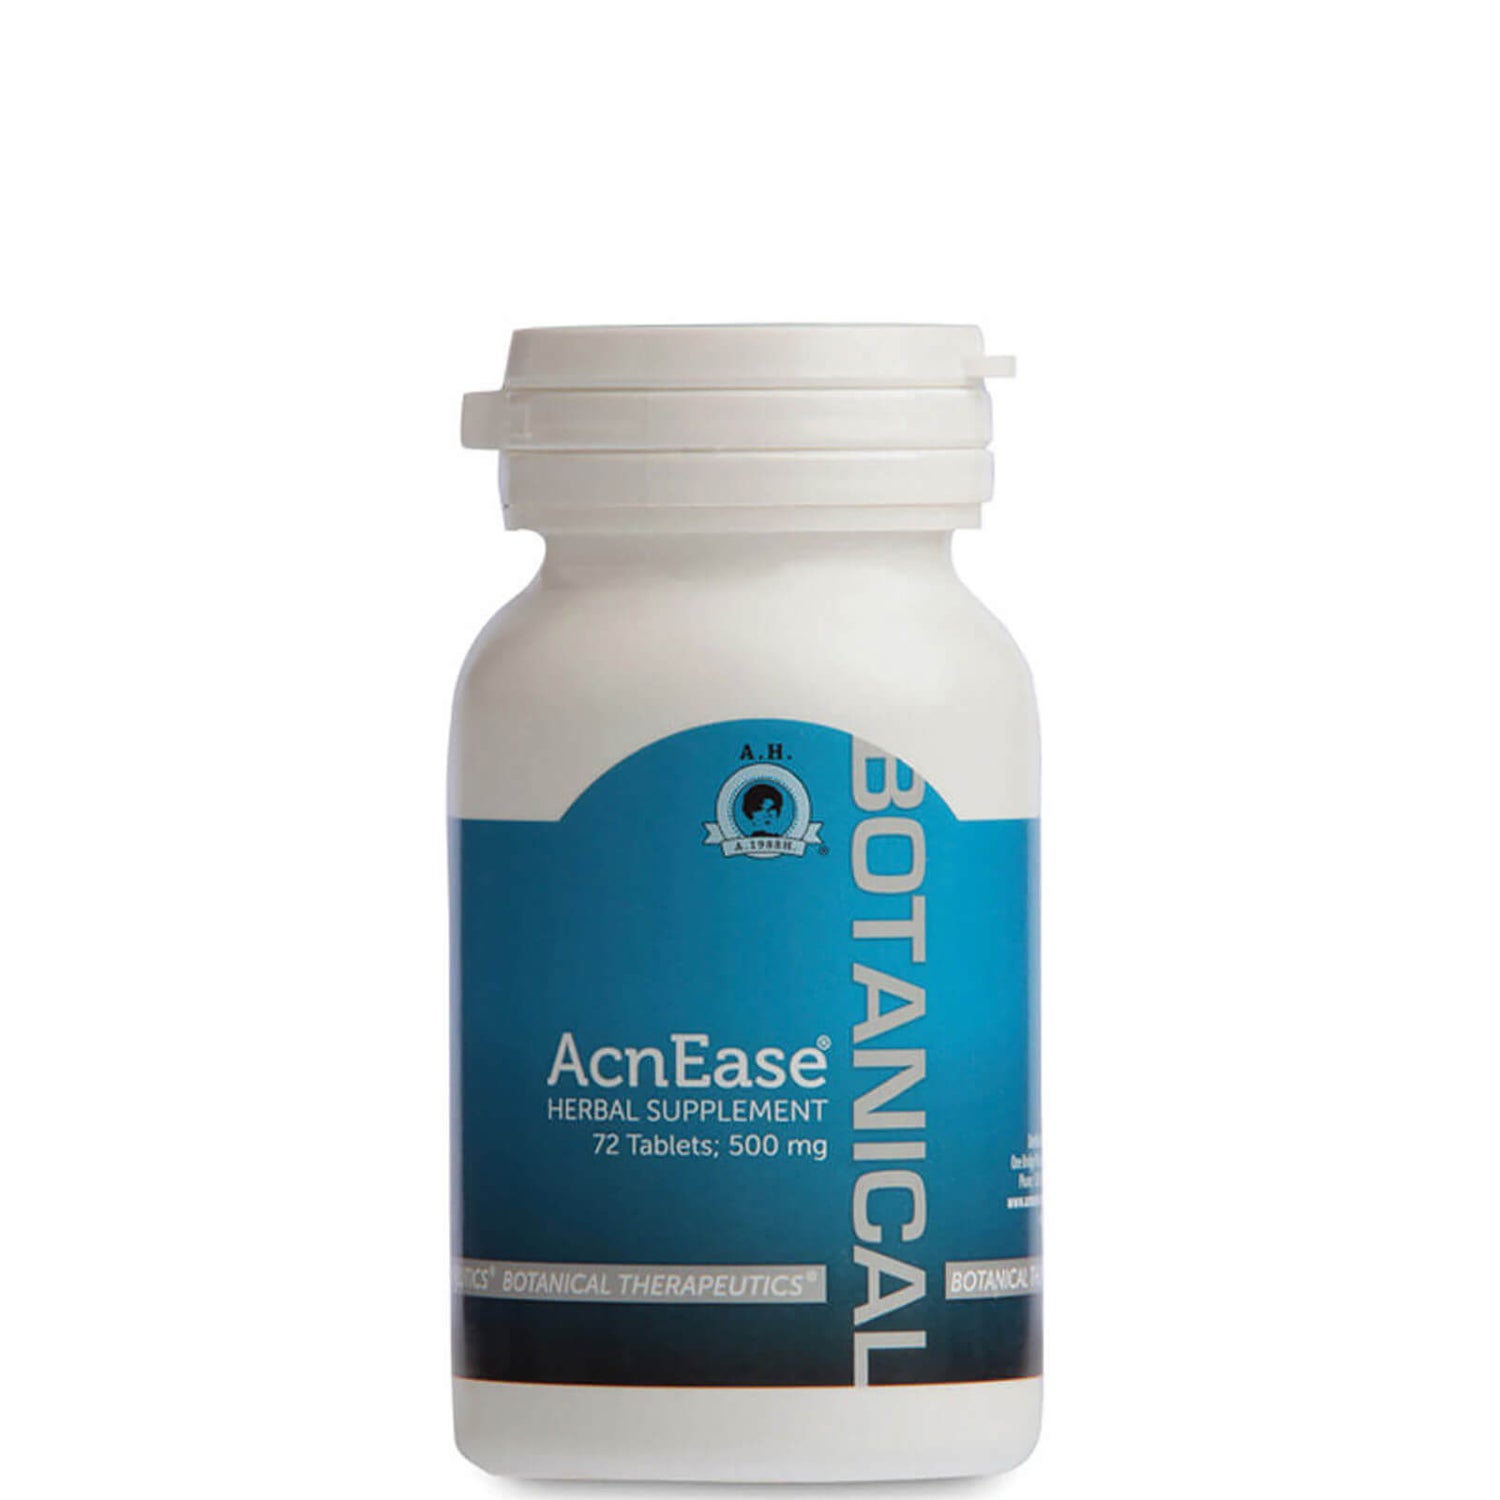 AcnEase痤疮修护Treatment - 1瓶